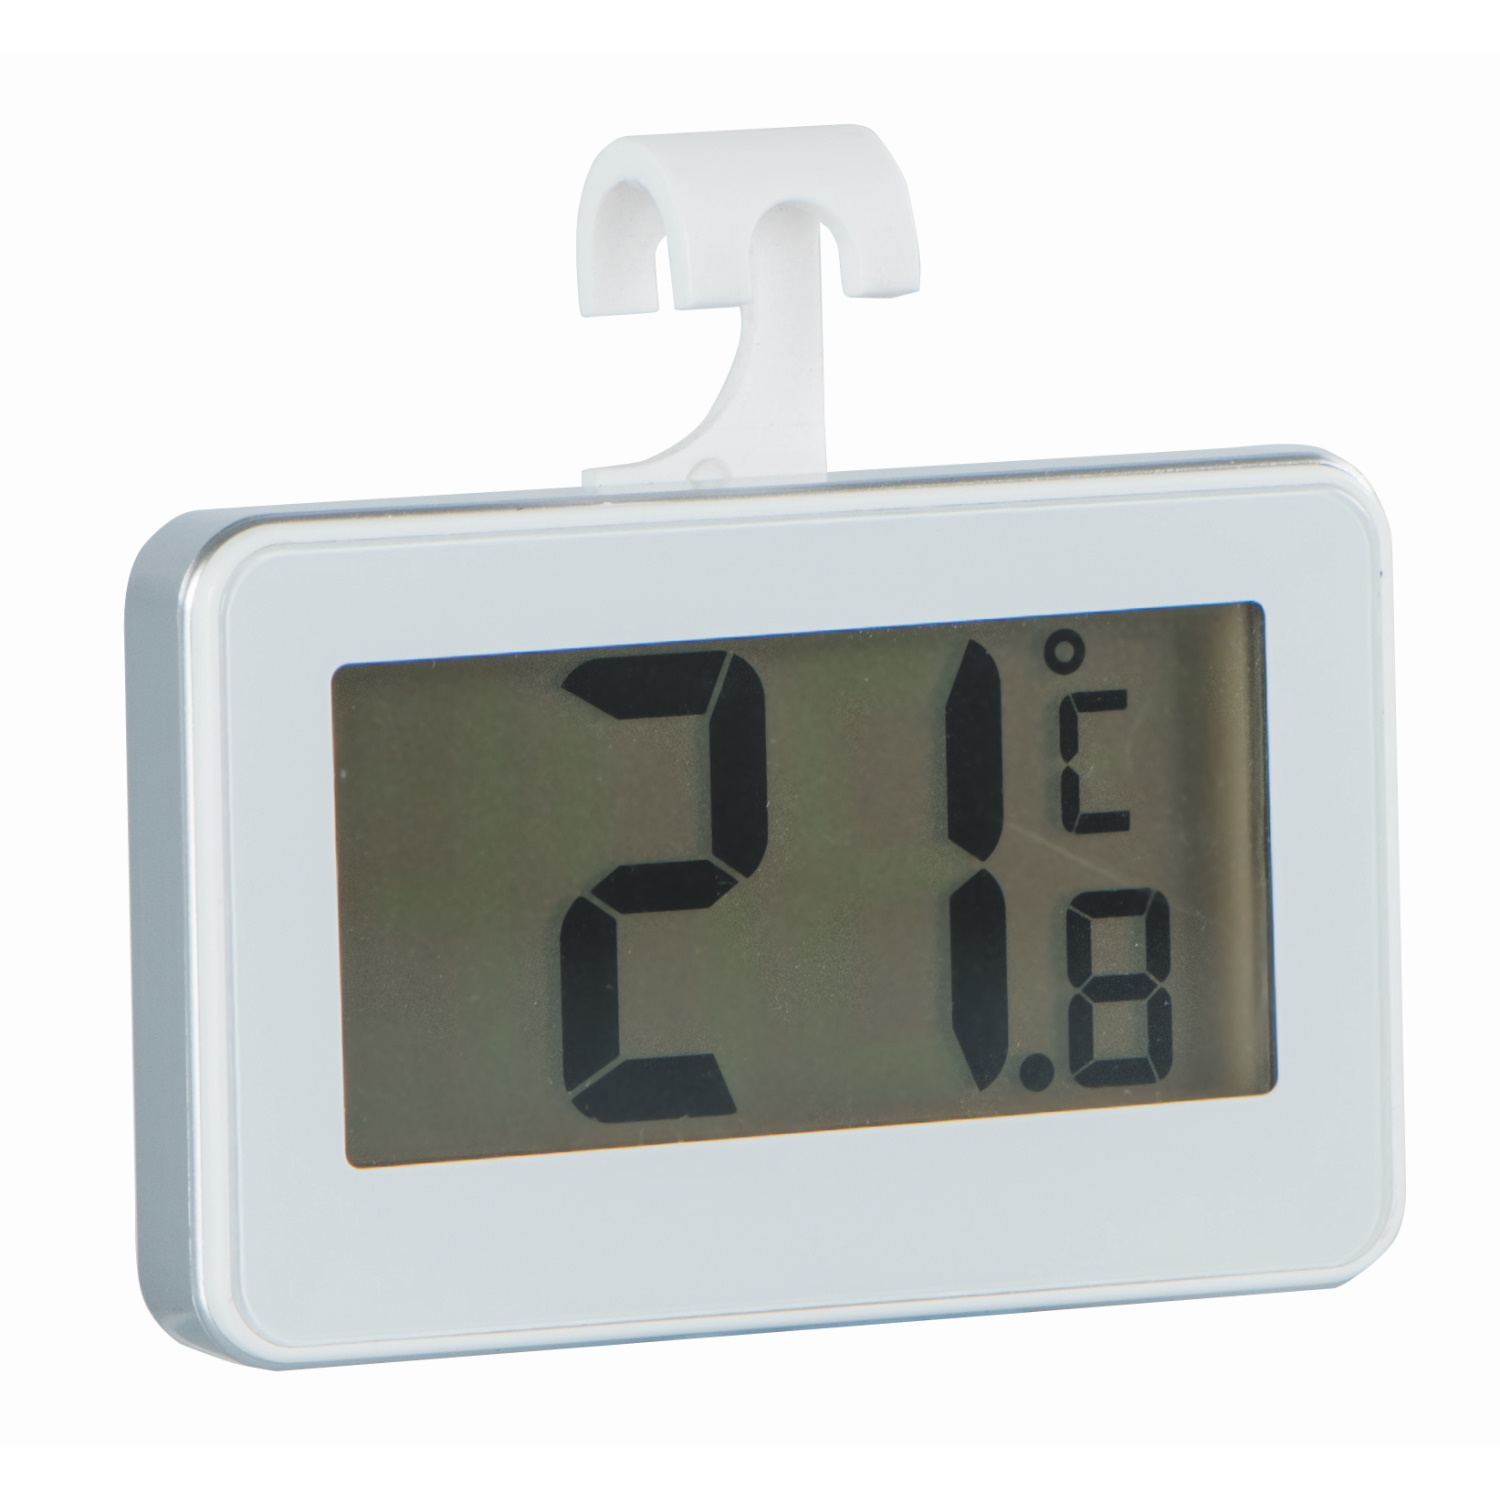 Avanti Digital Fridge - Freezer Thermometer